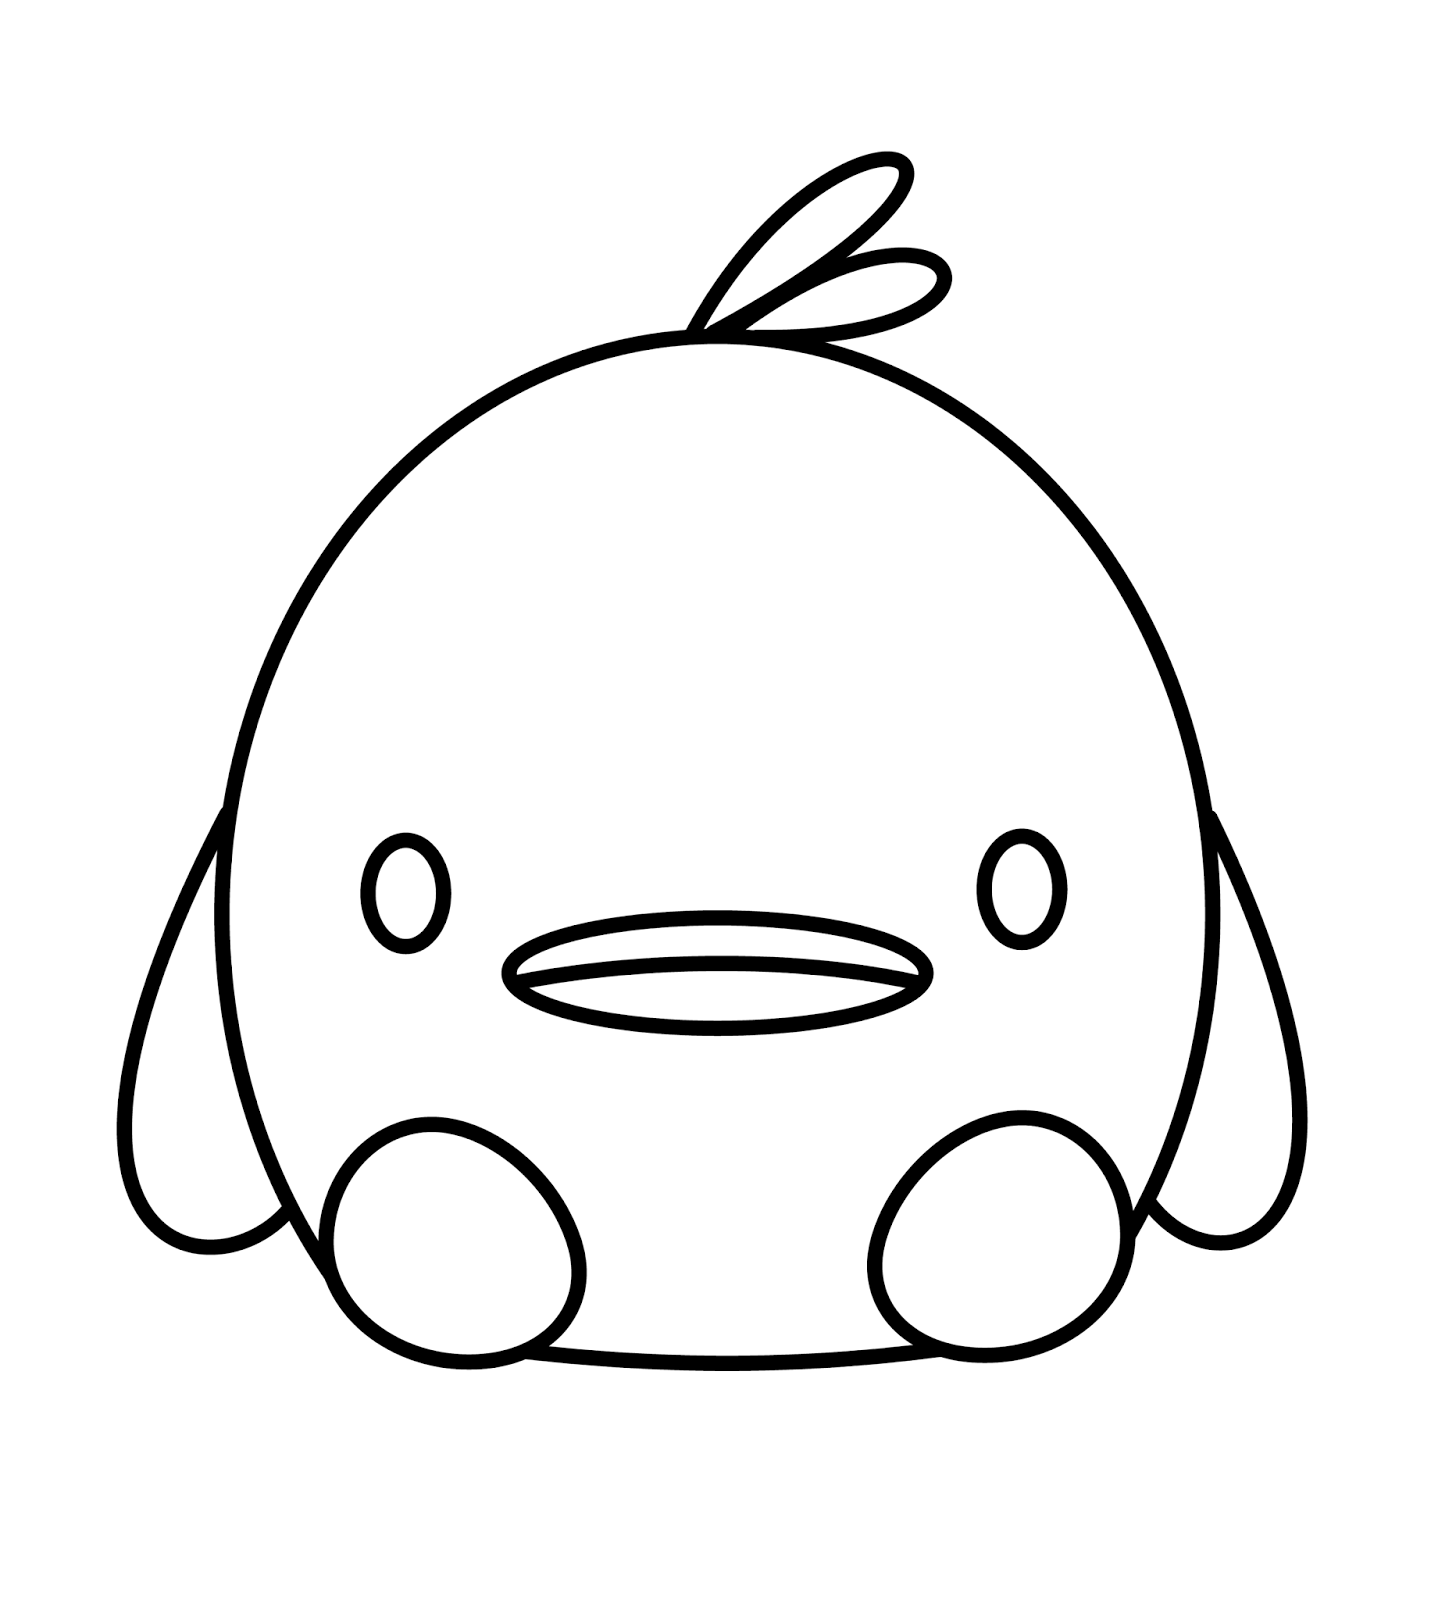 Cute N Kawaii: How To Draw A Kawaii Duck